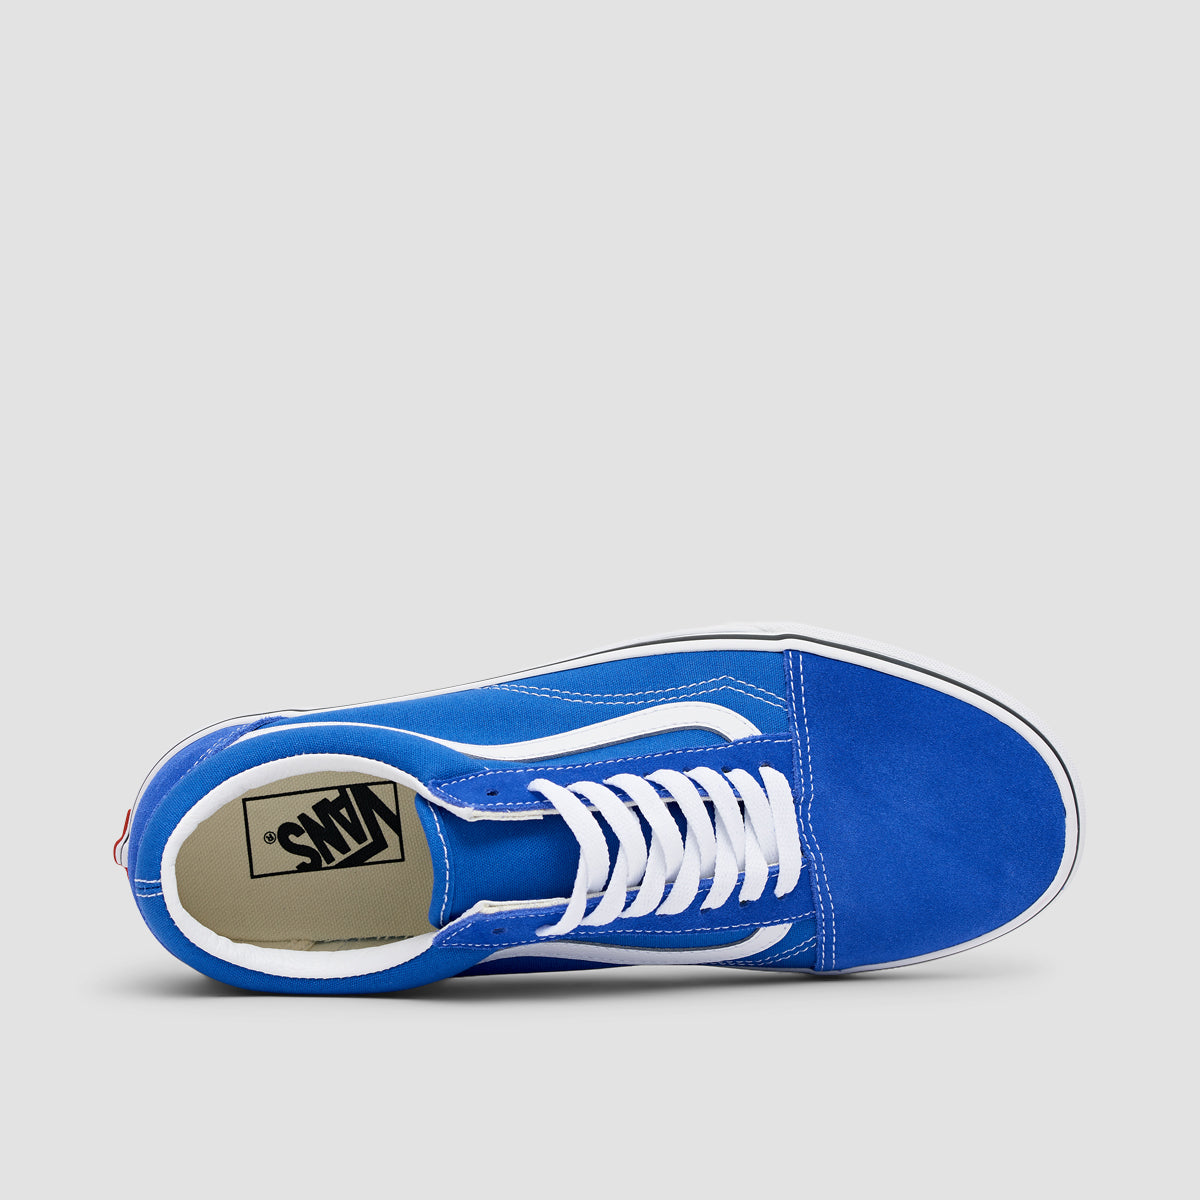 Vans Old Skool Shoes - Dazzling Blue